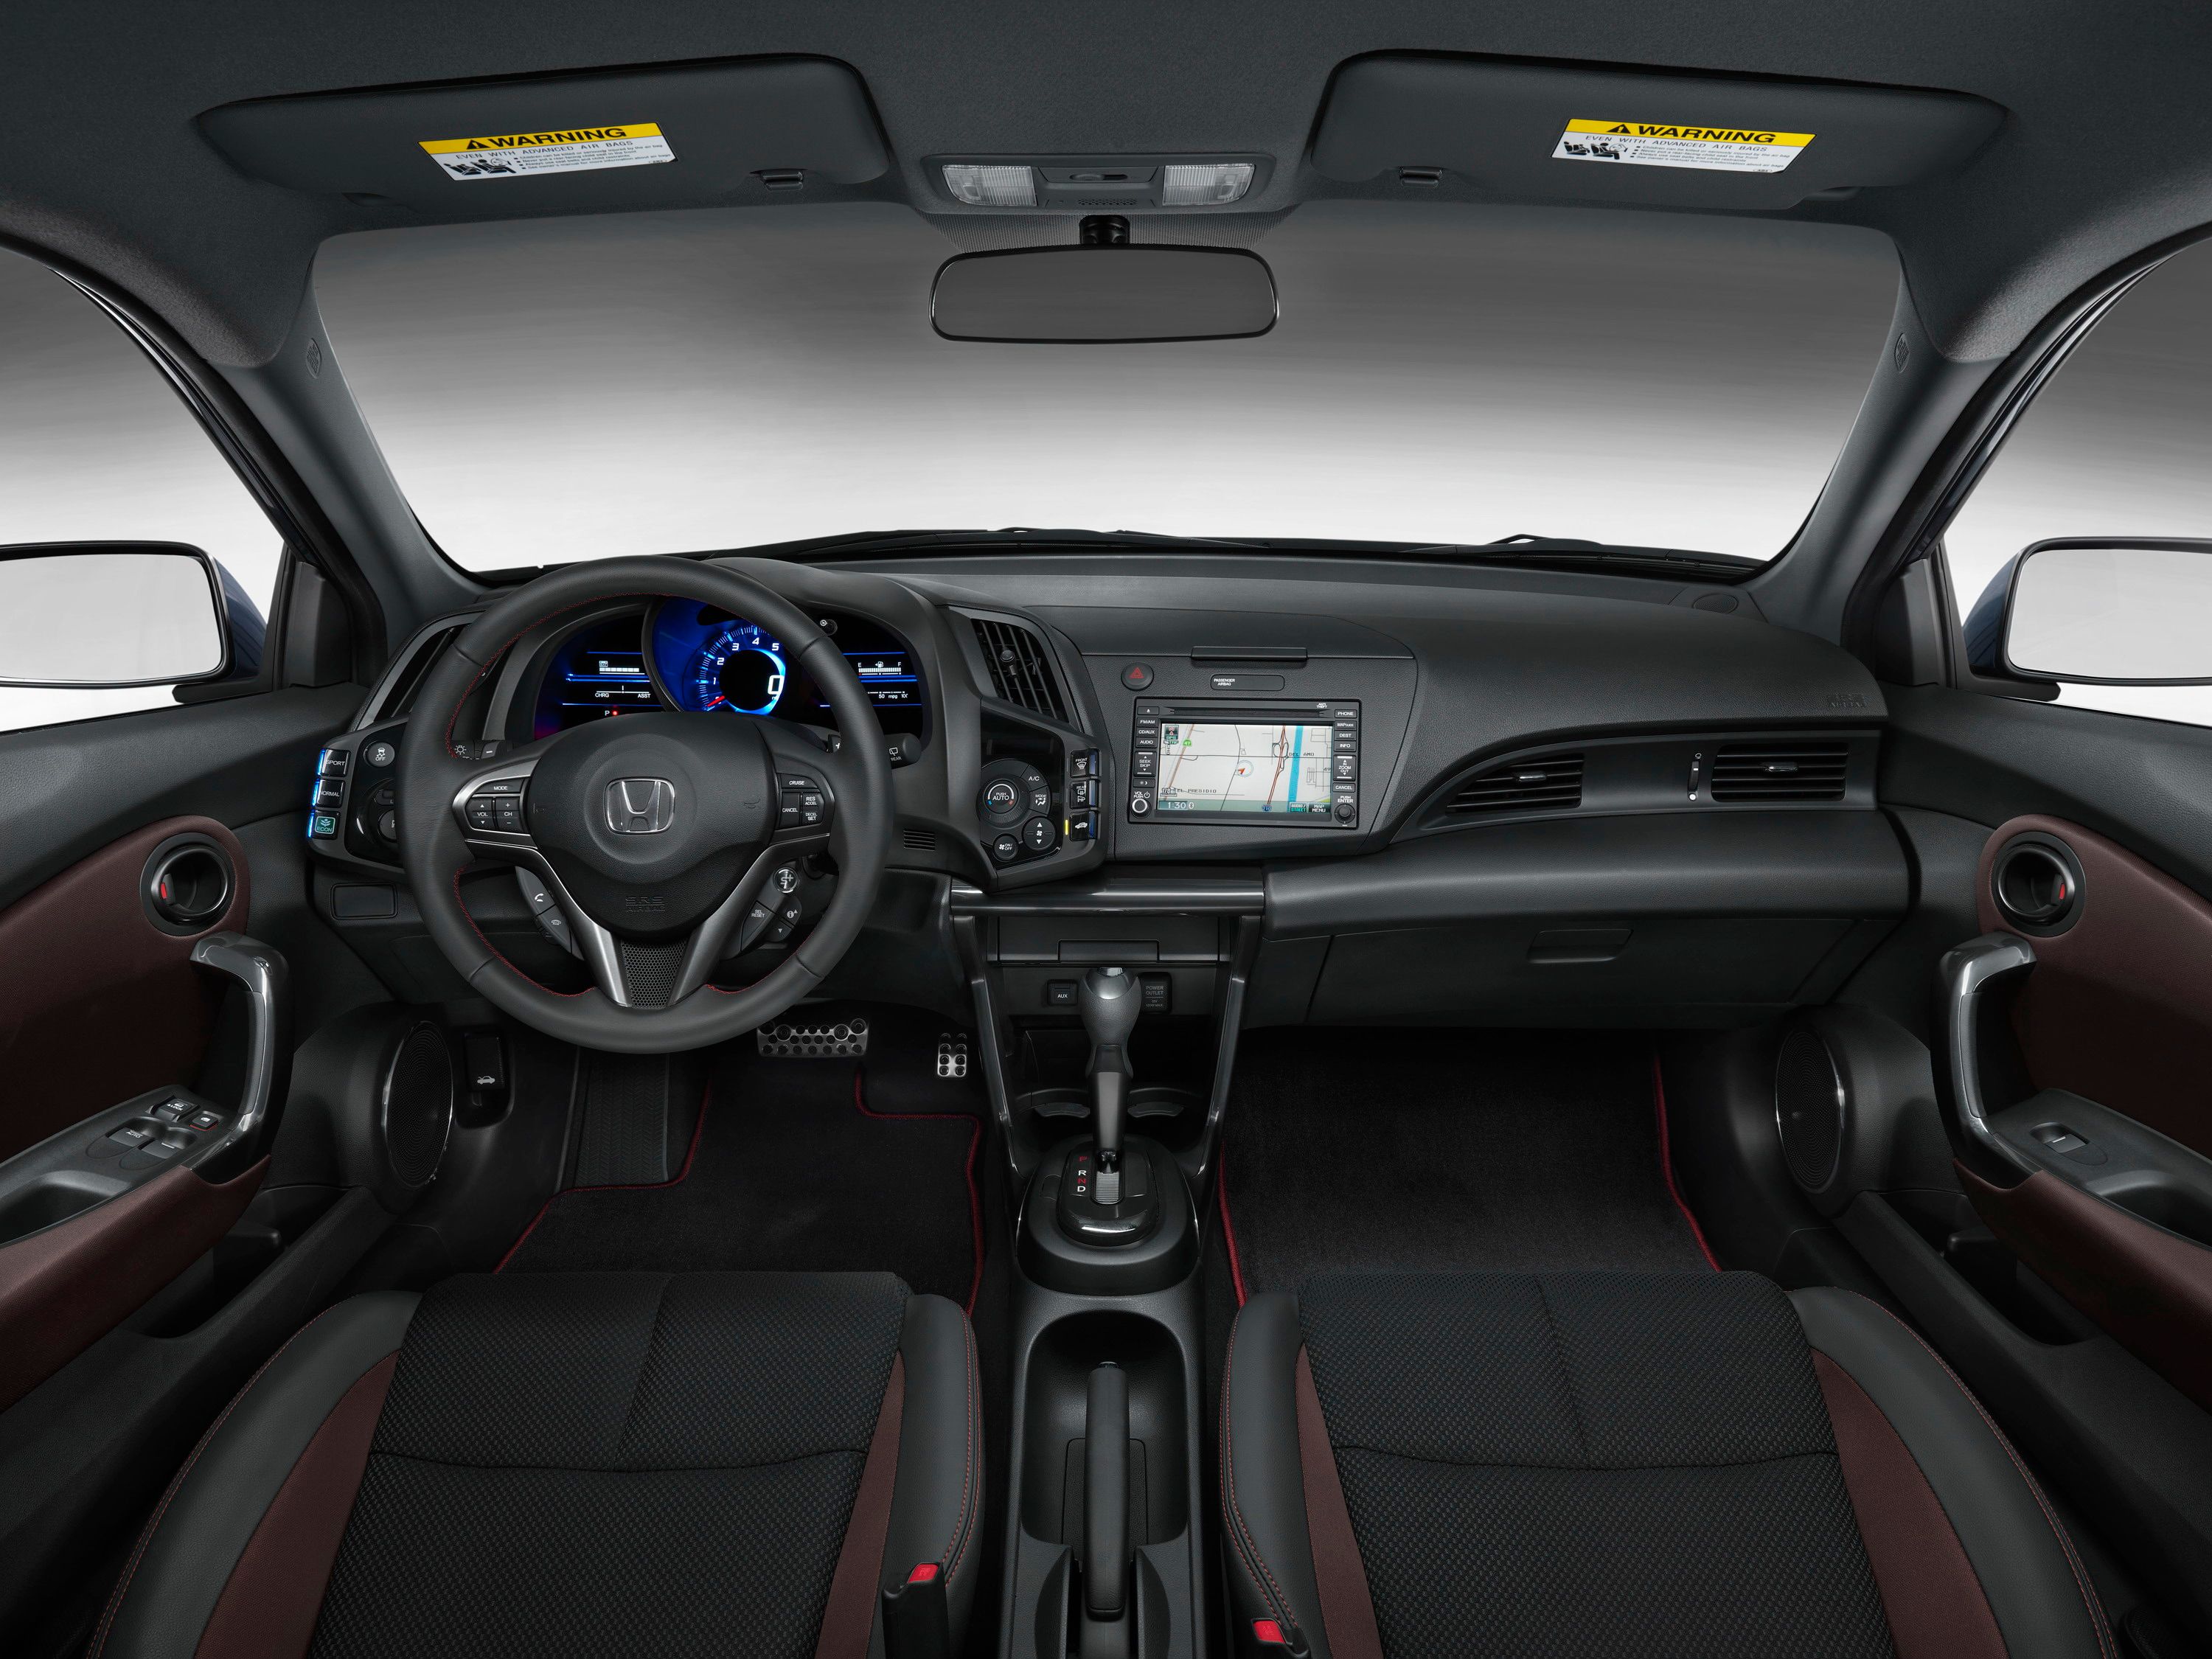 Honda CRZ 2020  New Honda CRZ 2020 Interior, Exterior, Features